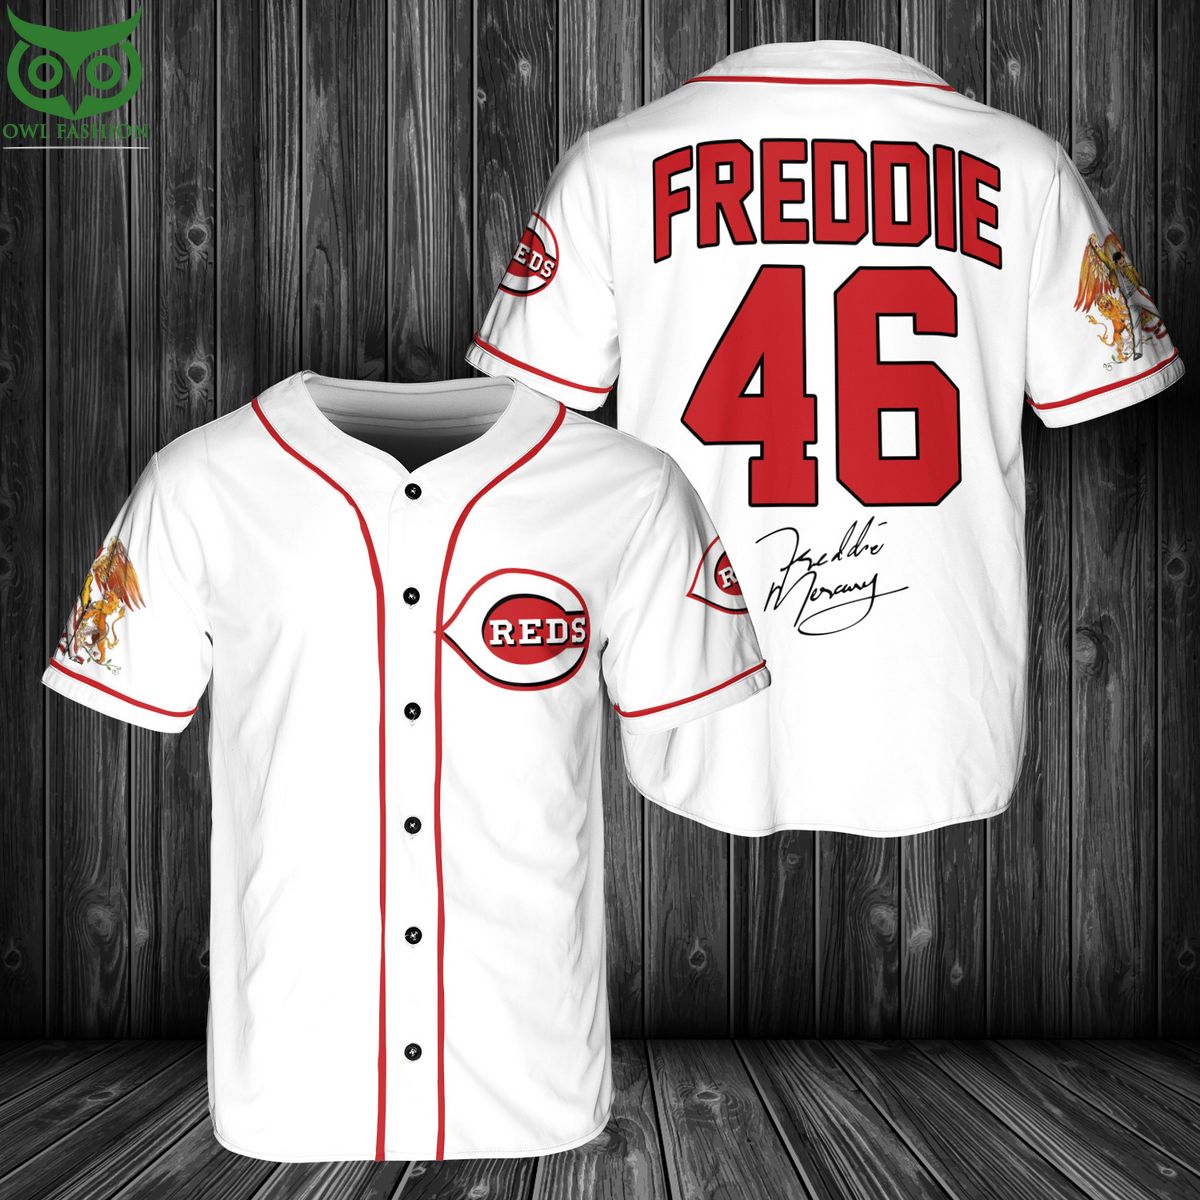 Freddie Mercury X Cincinnati Reds Baseball Jersey